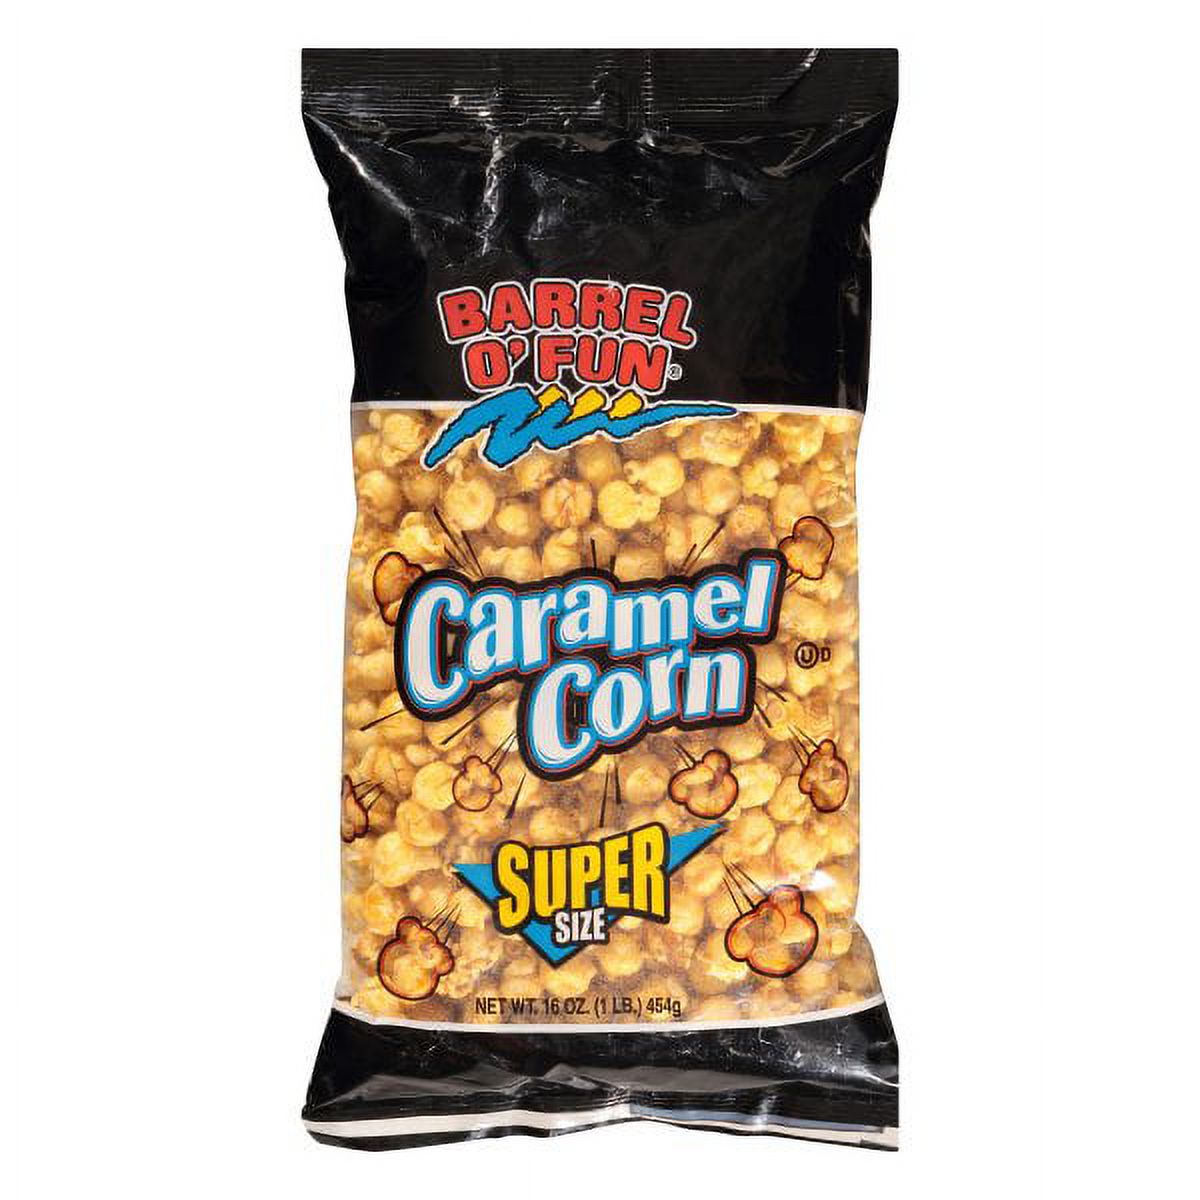 Barrel O' Fun Caramel Corn Super Size, 18 Oz. - image 1 of 4